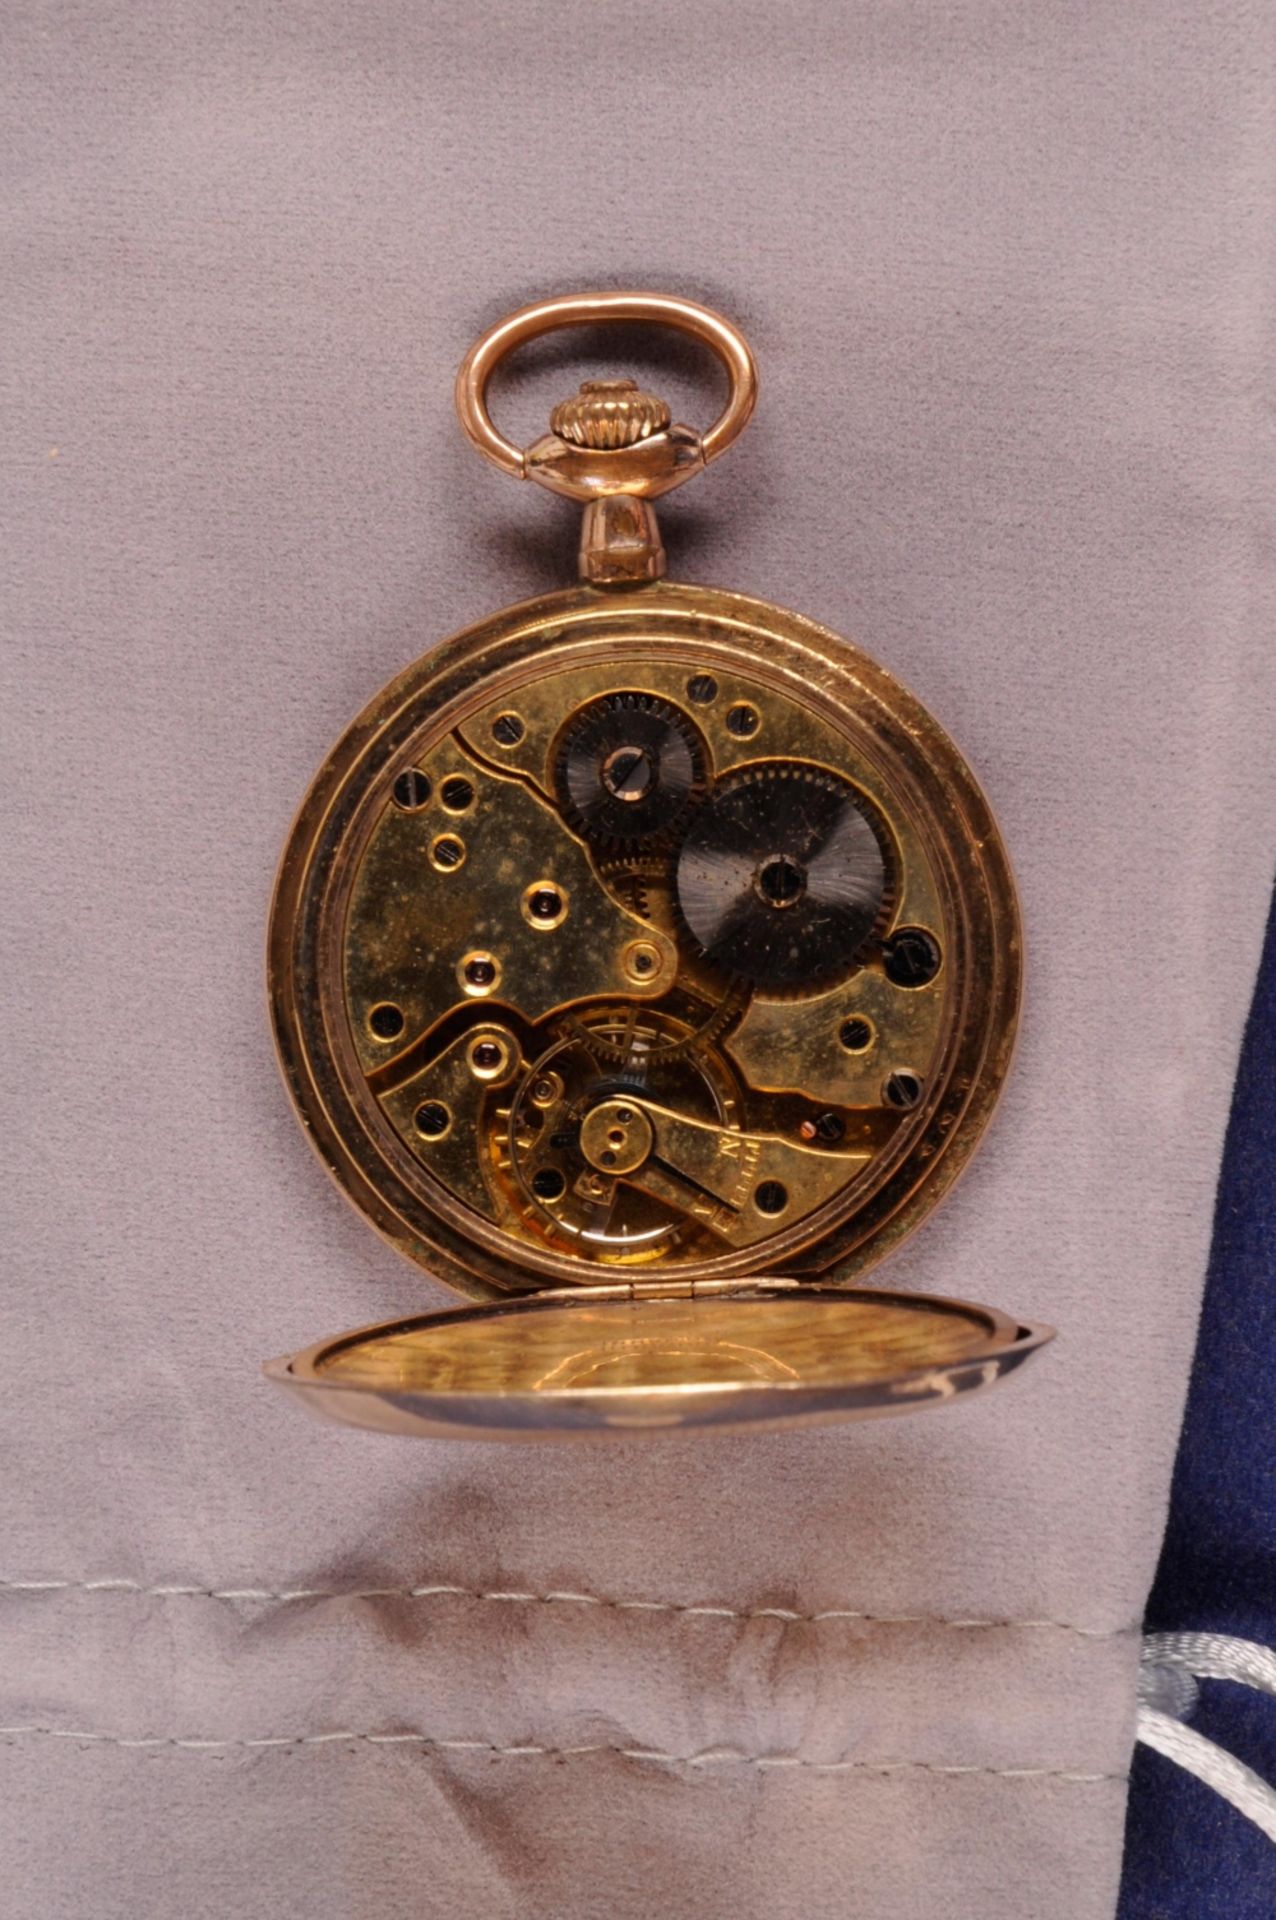 Pocket-watch \\Drusus\\ Savonette 1915-1930, design mark: bull (G. Rough Pforzheim), Germany, - Image 4 of 5